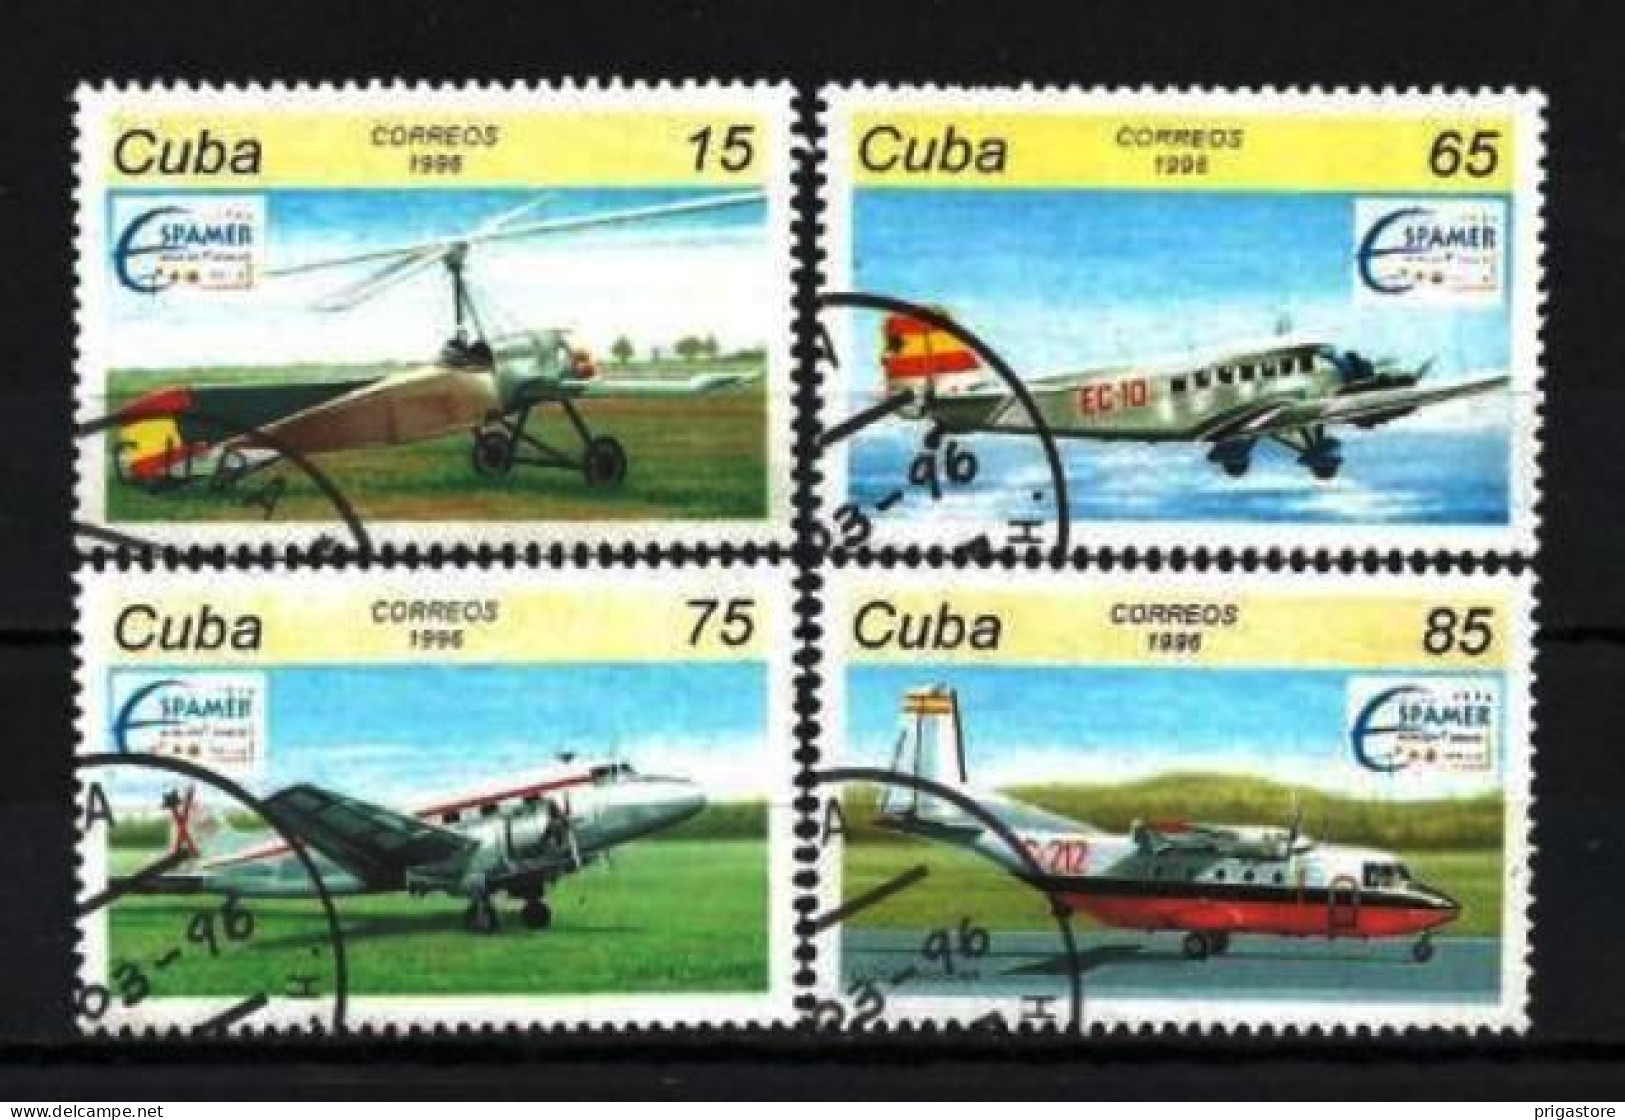 Cuba 1996 Avions (28) Yvert N° 3520 à 3523 Oblitéré Used - Gebruikt